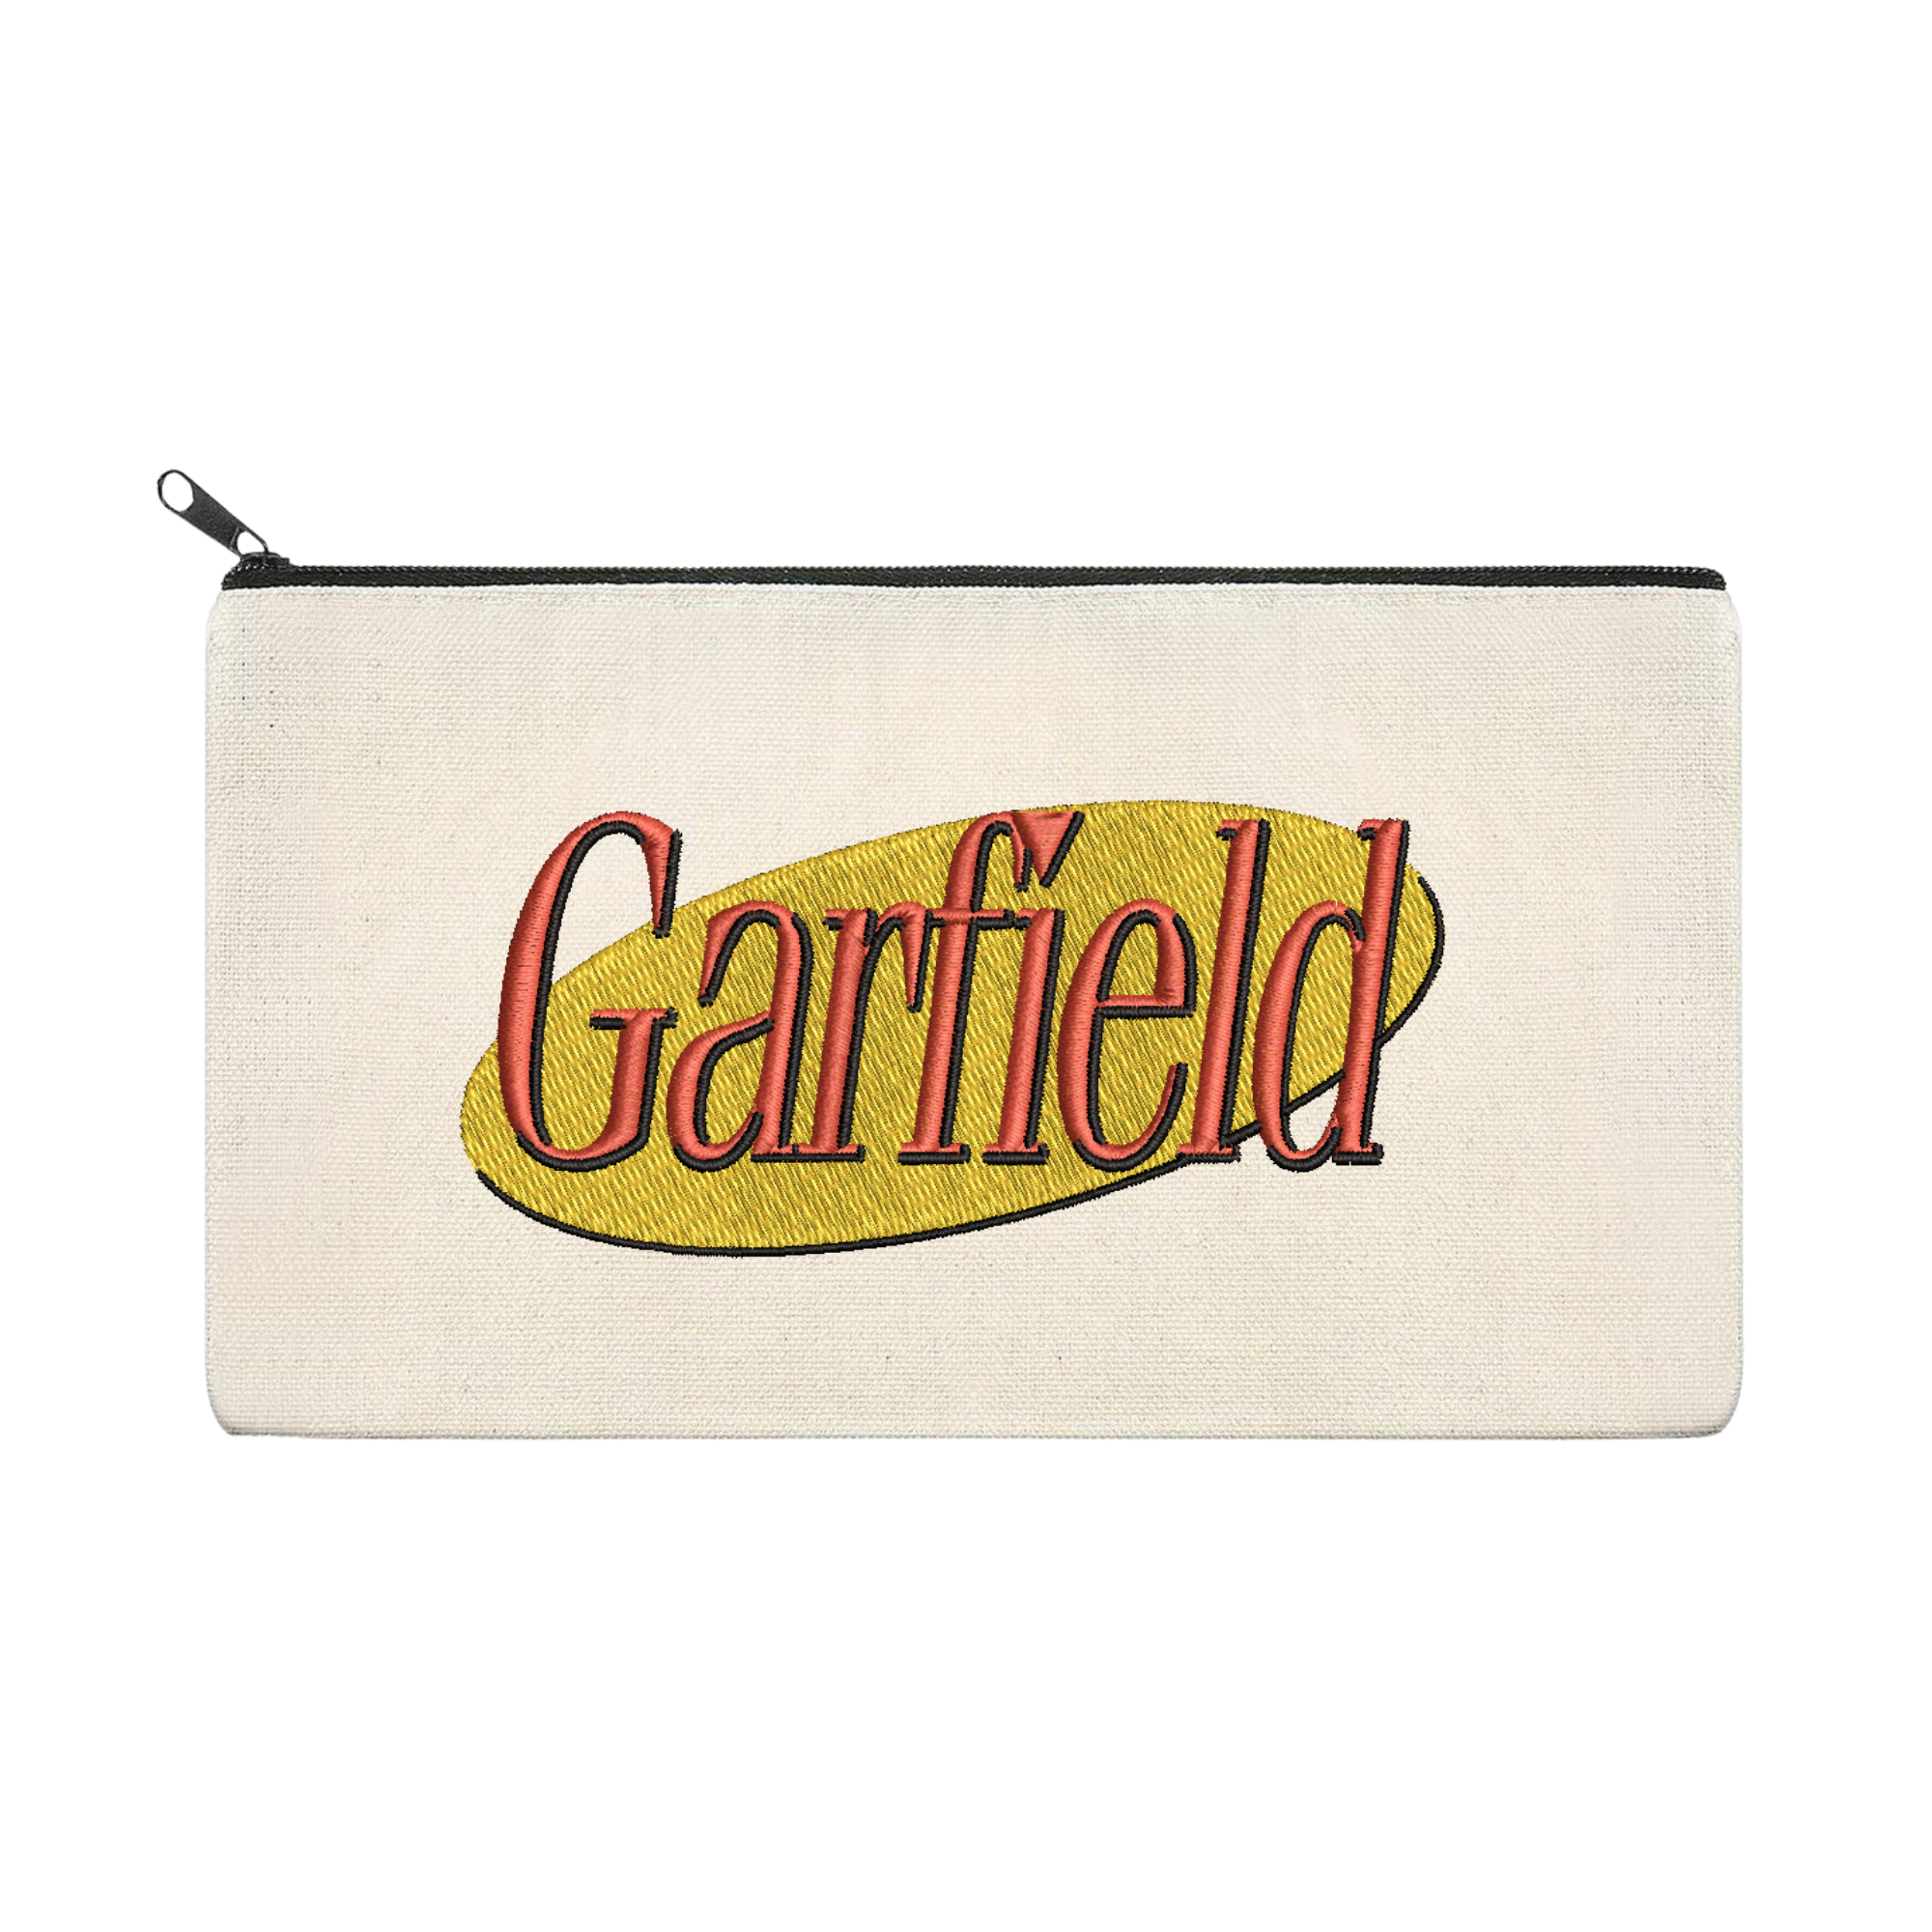 Garfield Seinfeld Crossover Episode Multipurpose Zipper Pouch Bag